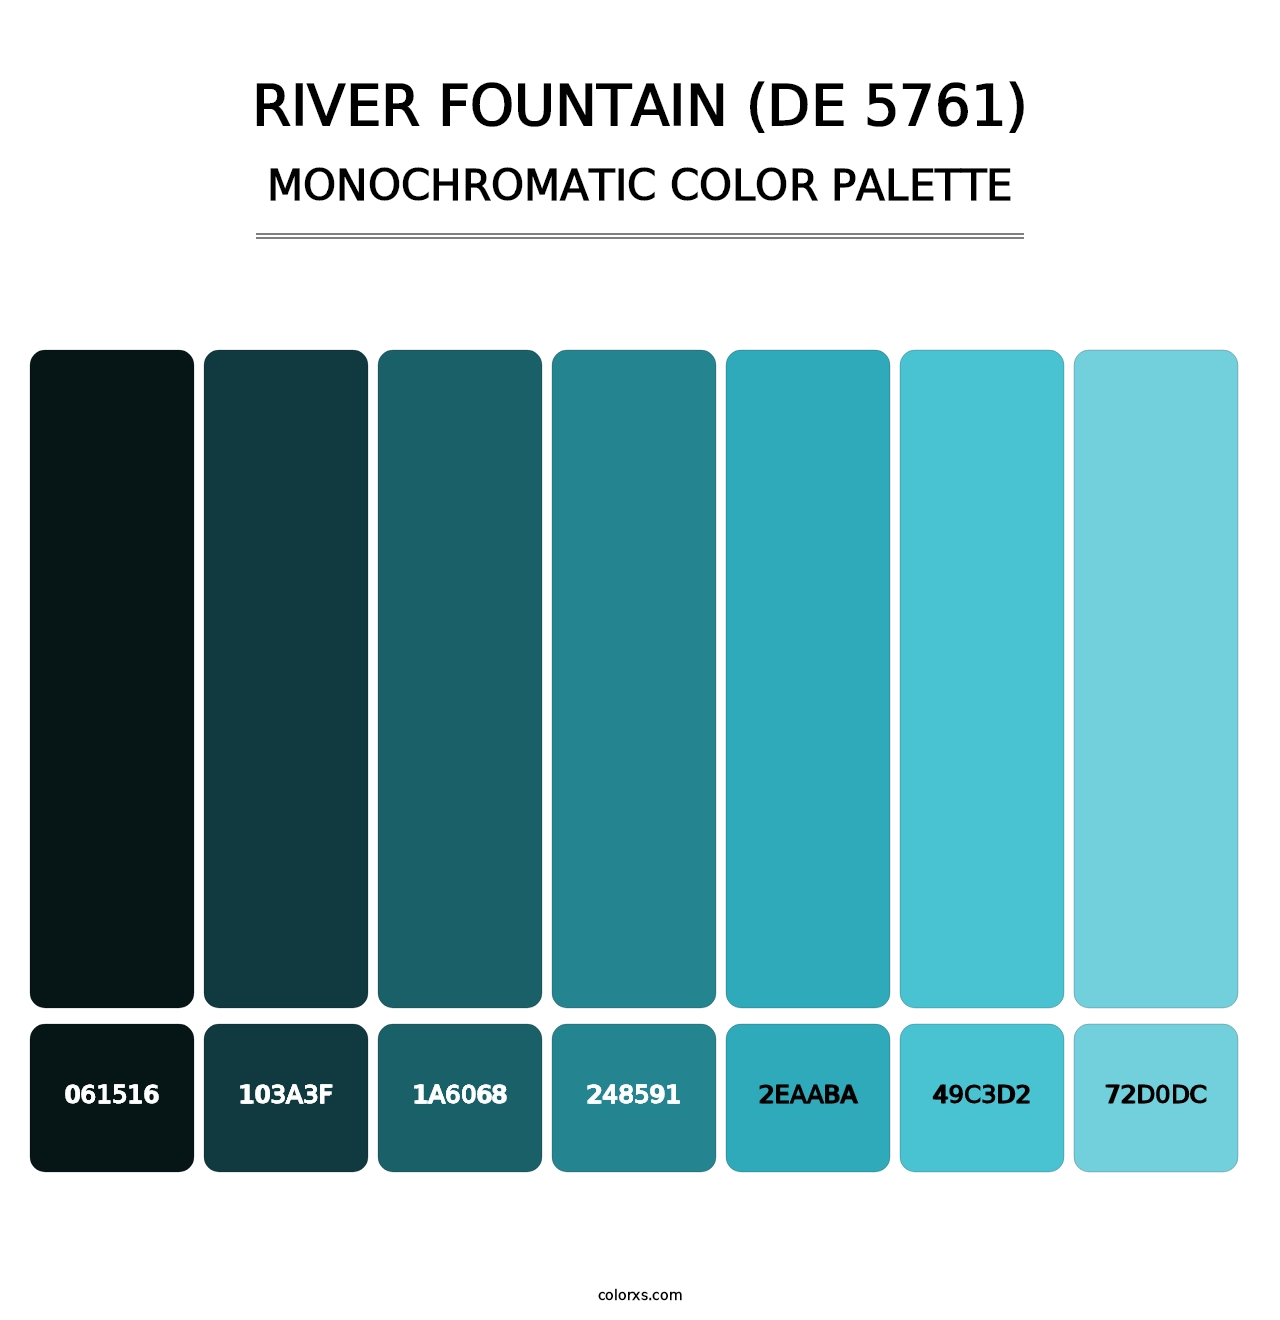 River Fountain (DE 5761) - Monochromatic Color Palette